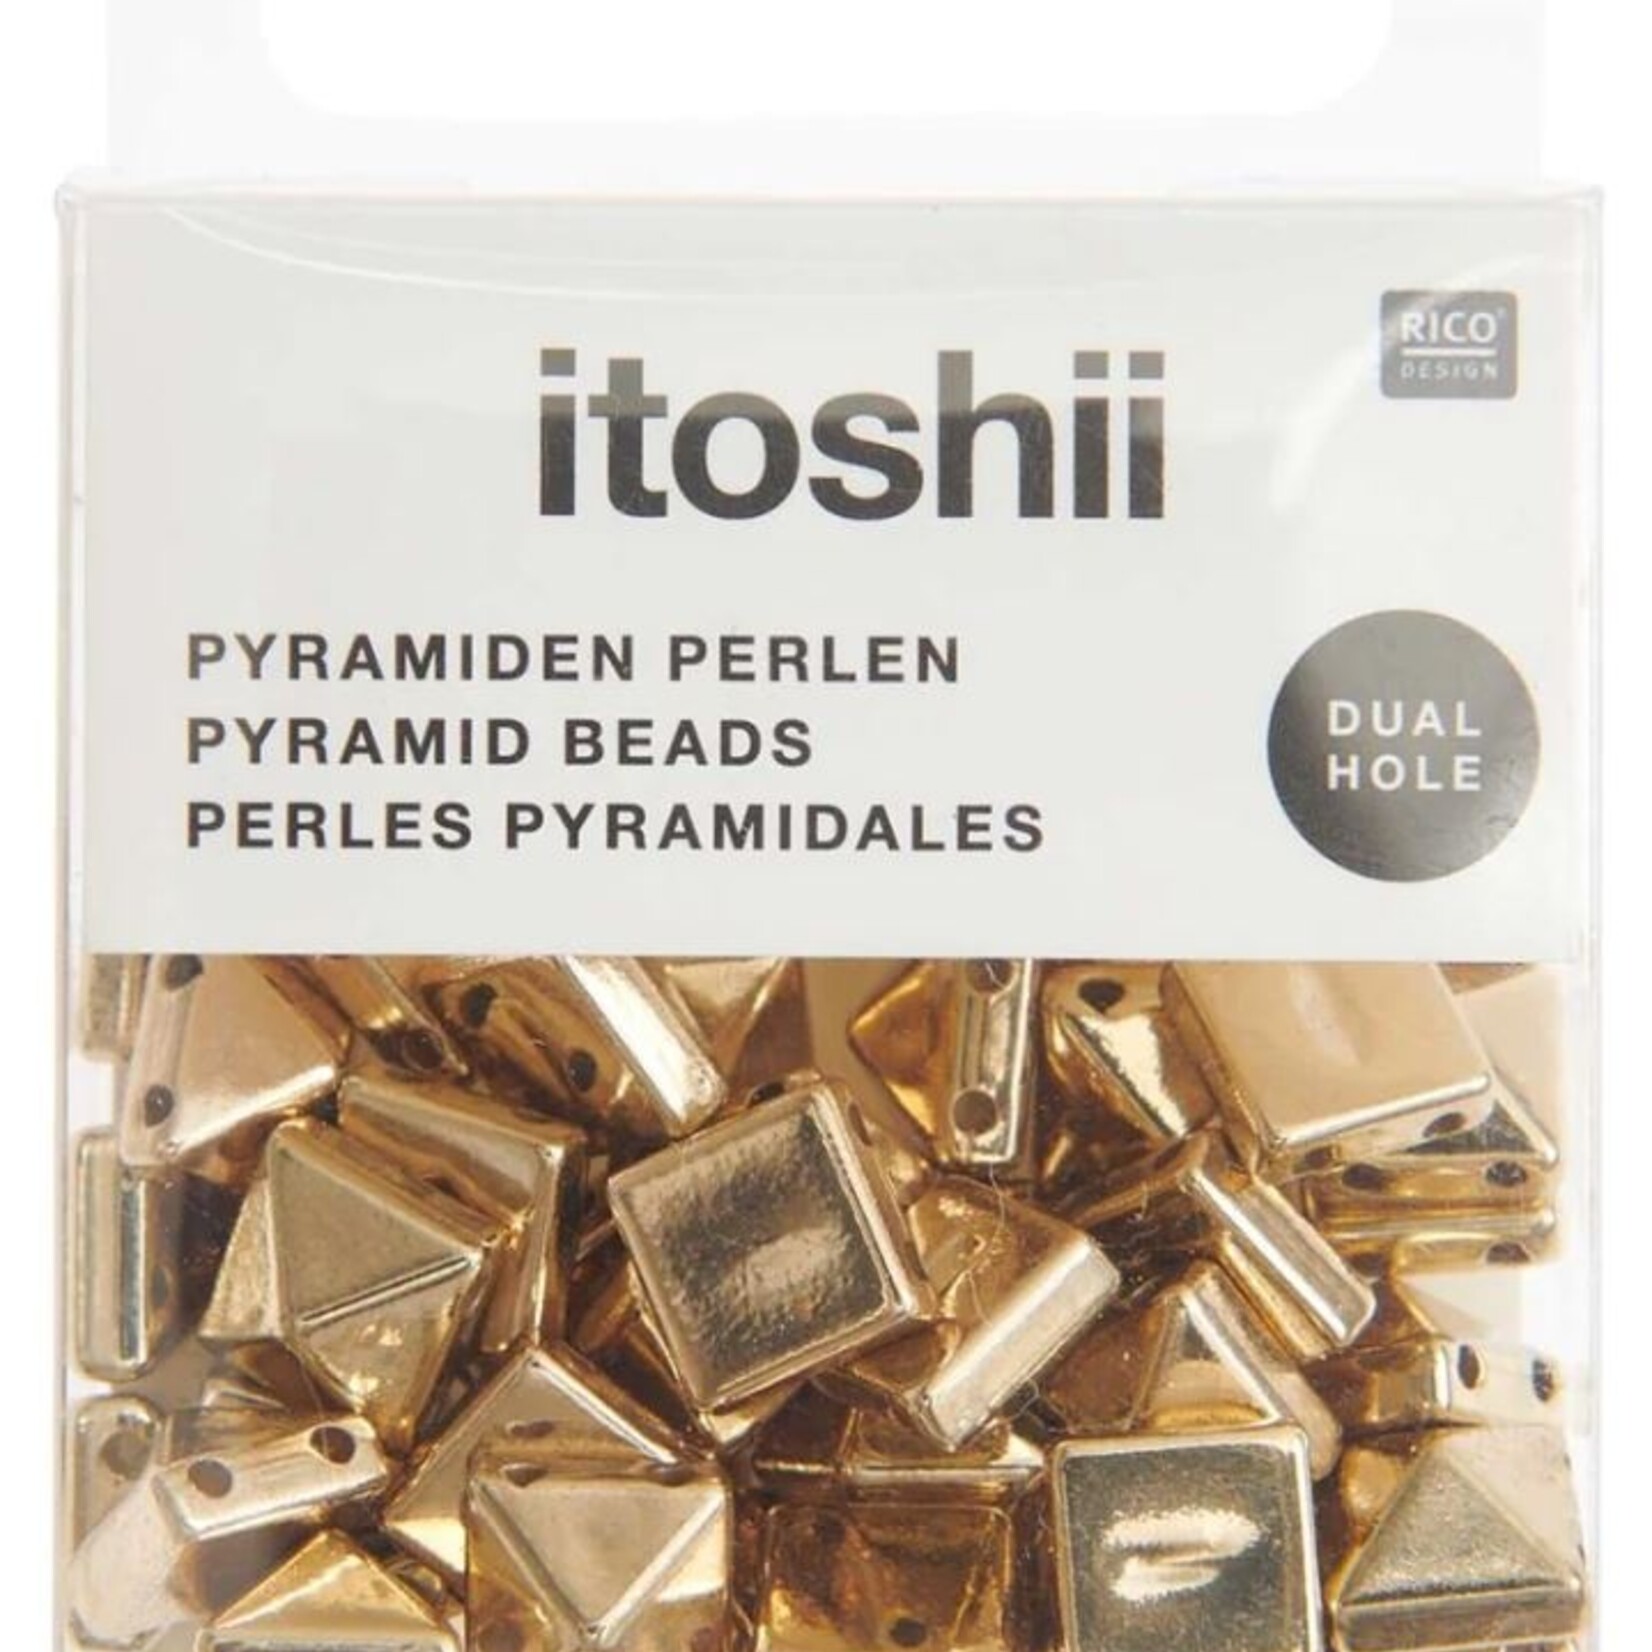 RICO Pyramid beads, square, S, gold, 50 pcs, 7 x 7 x 5 mm, 4 holes